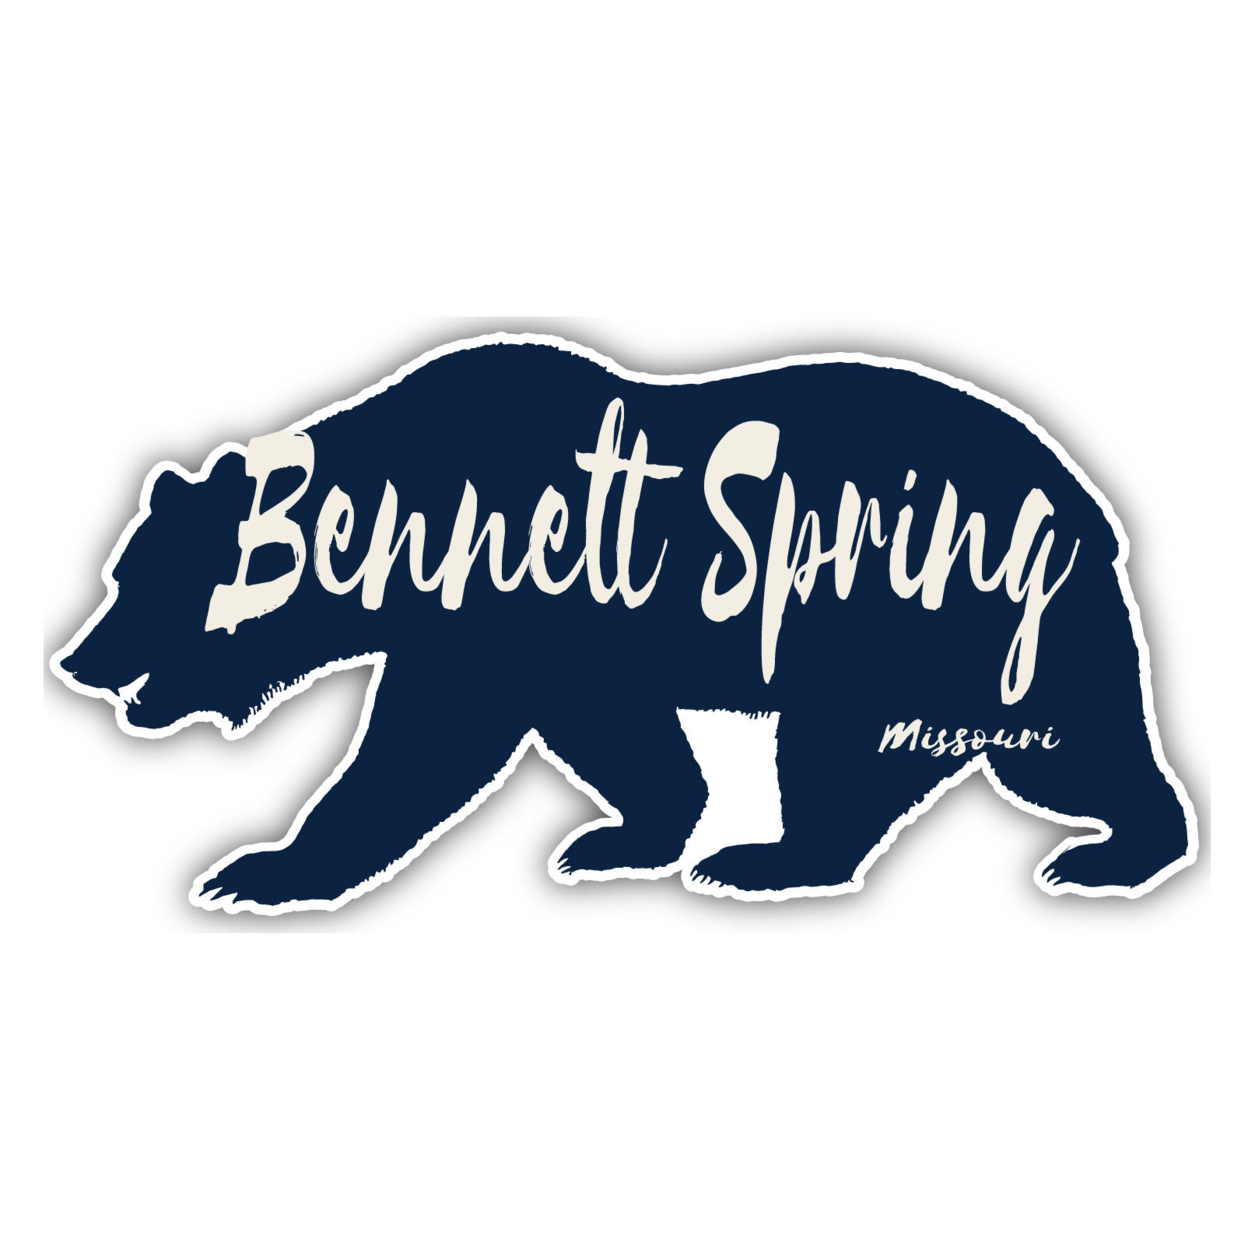 Bennett Spring Missouri Souvenir Decorative Stickers (Choose Theme And Size) - Single Unit, 2-Inch, Bear